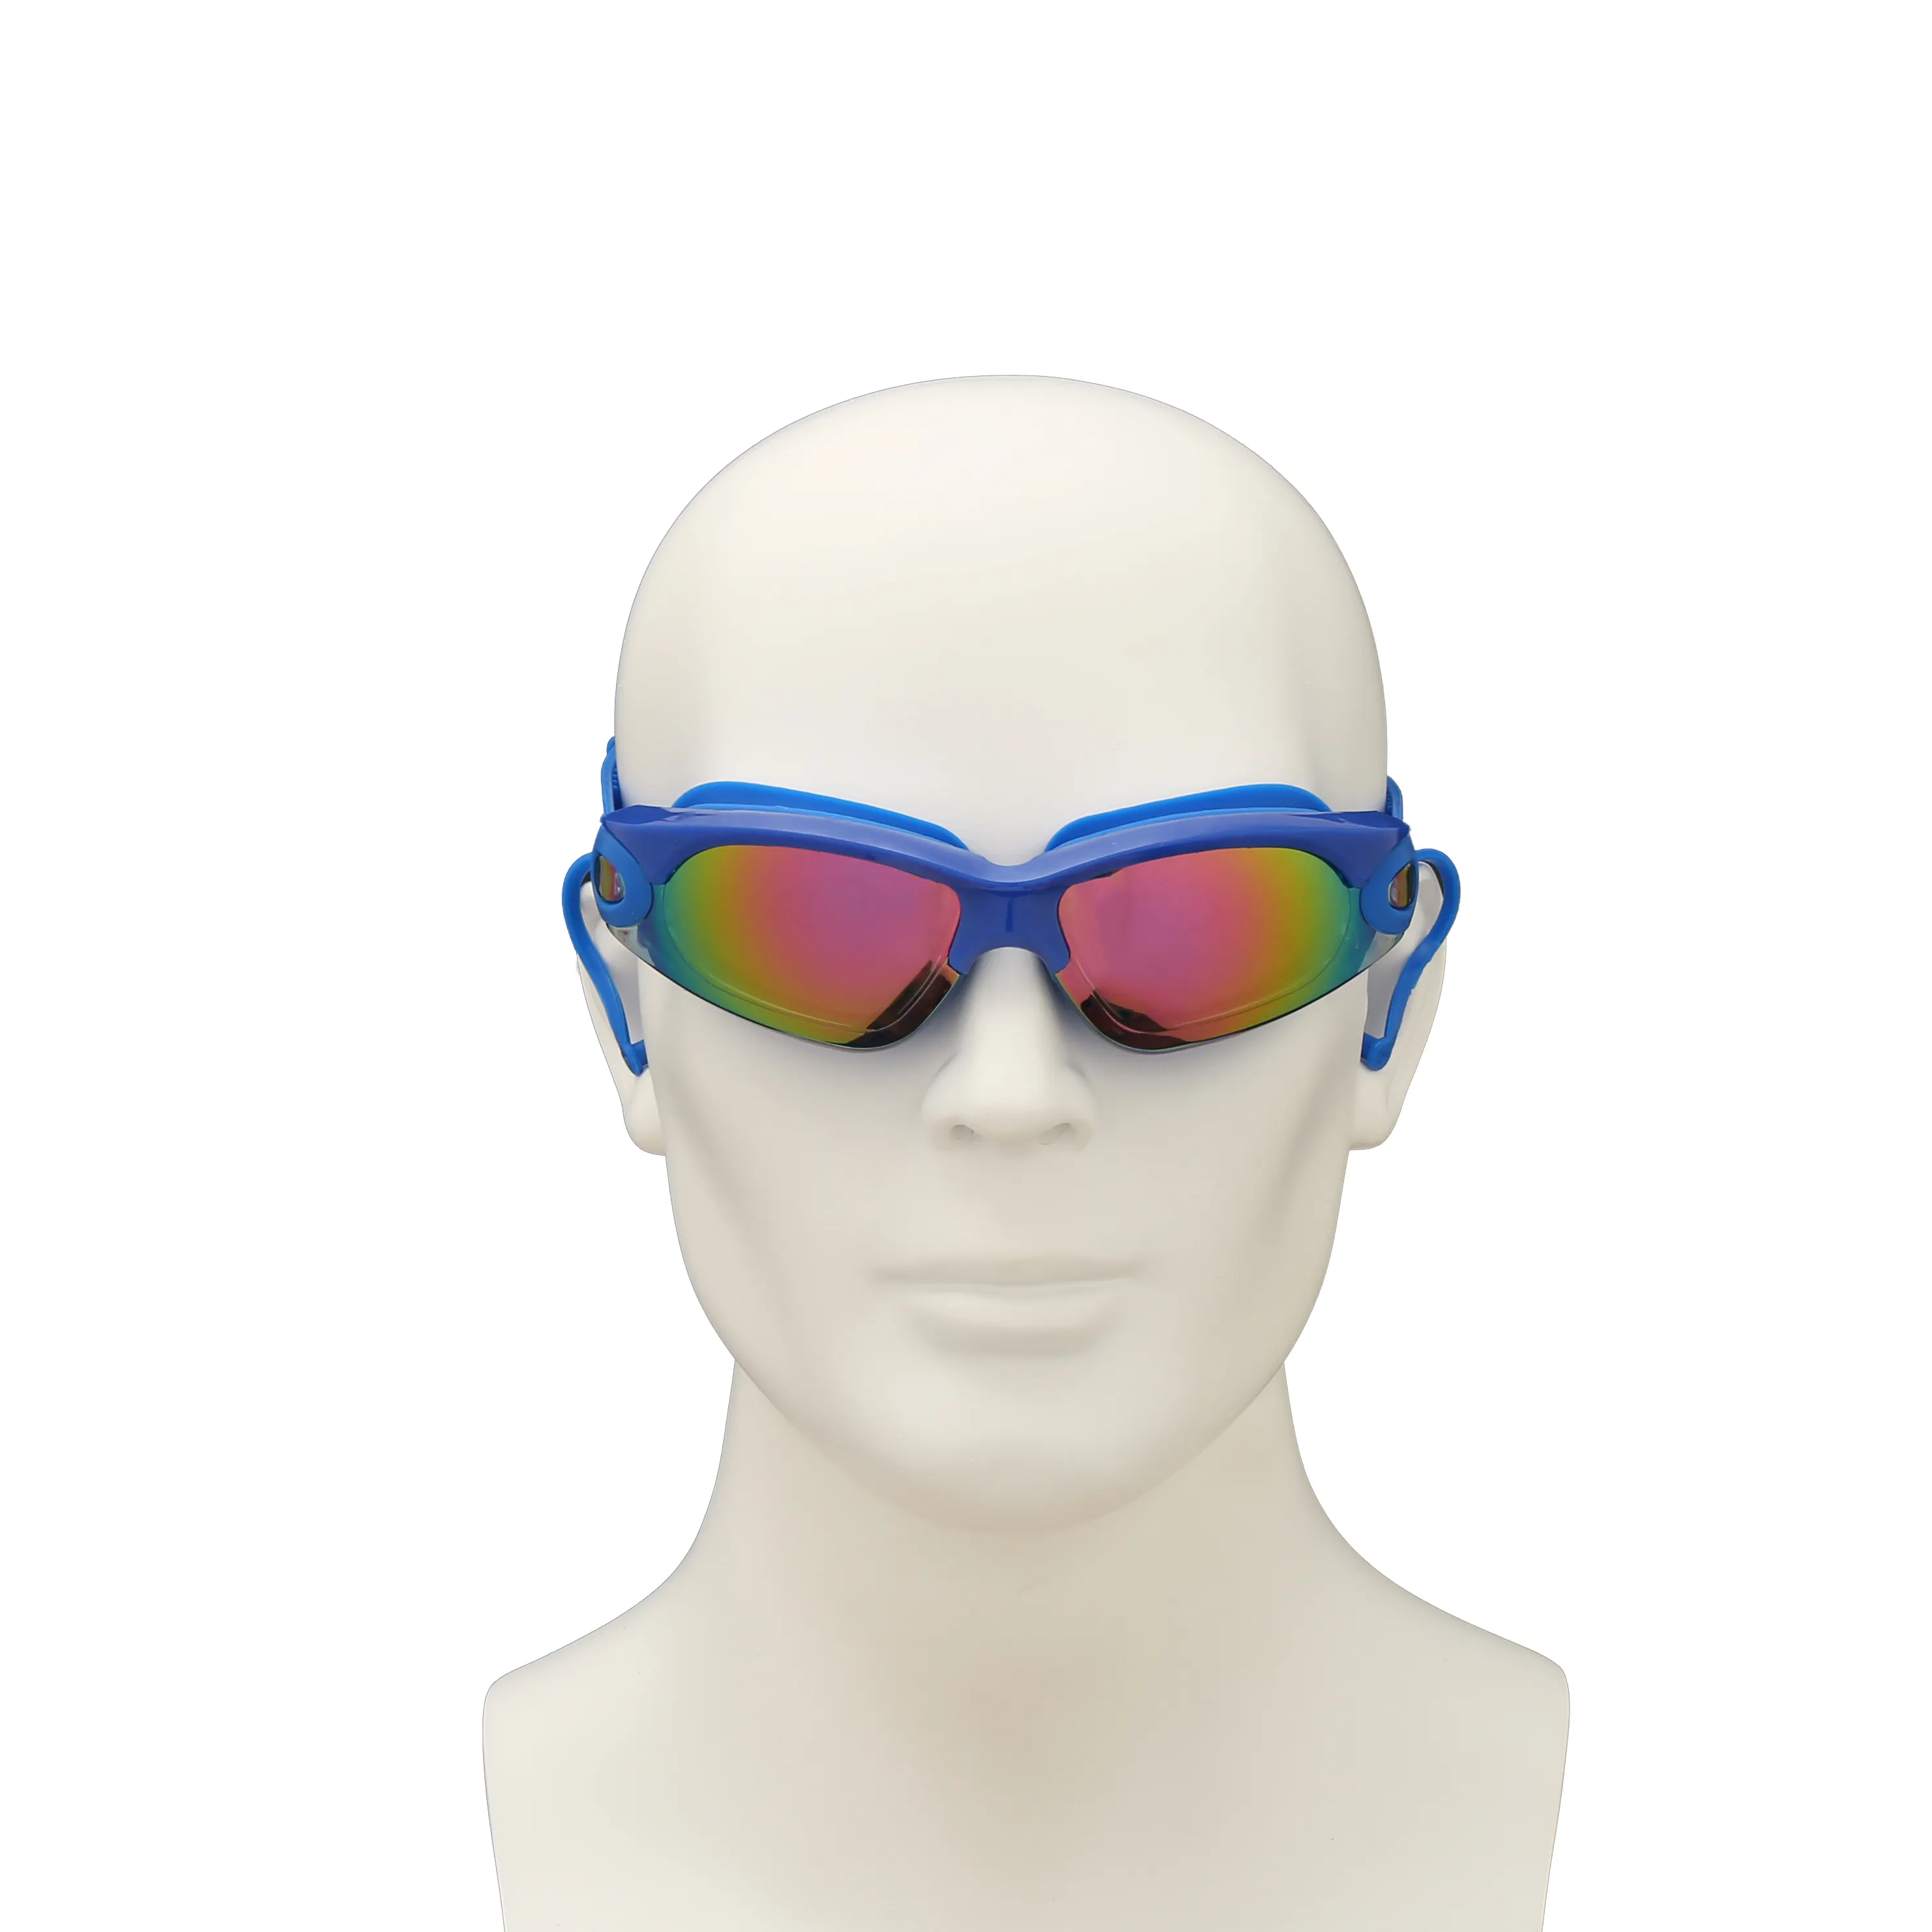 Kacamata Pelindung Uv Anti Kabut Kustom untuk Pria, Kacamata Renang Kompetisi Anti Kabut